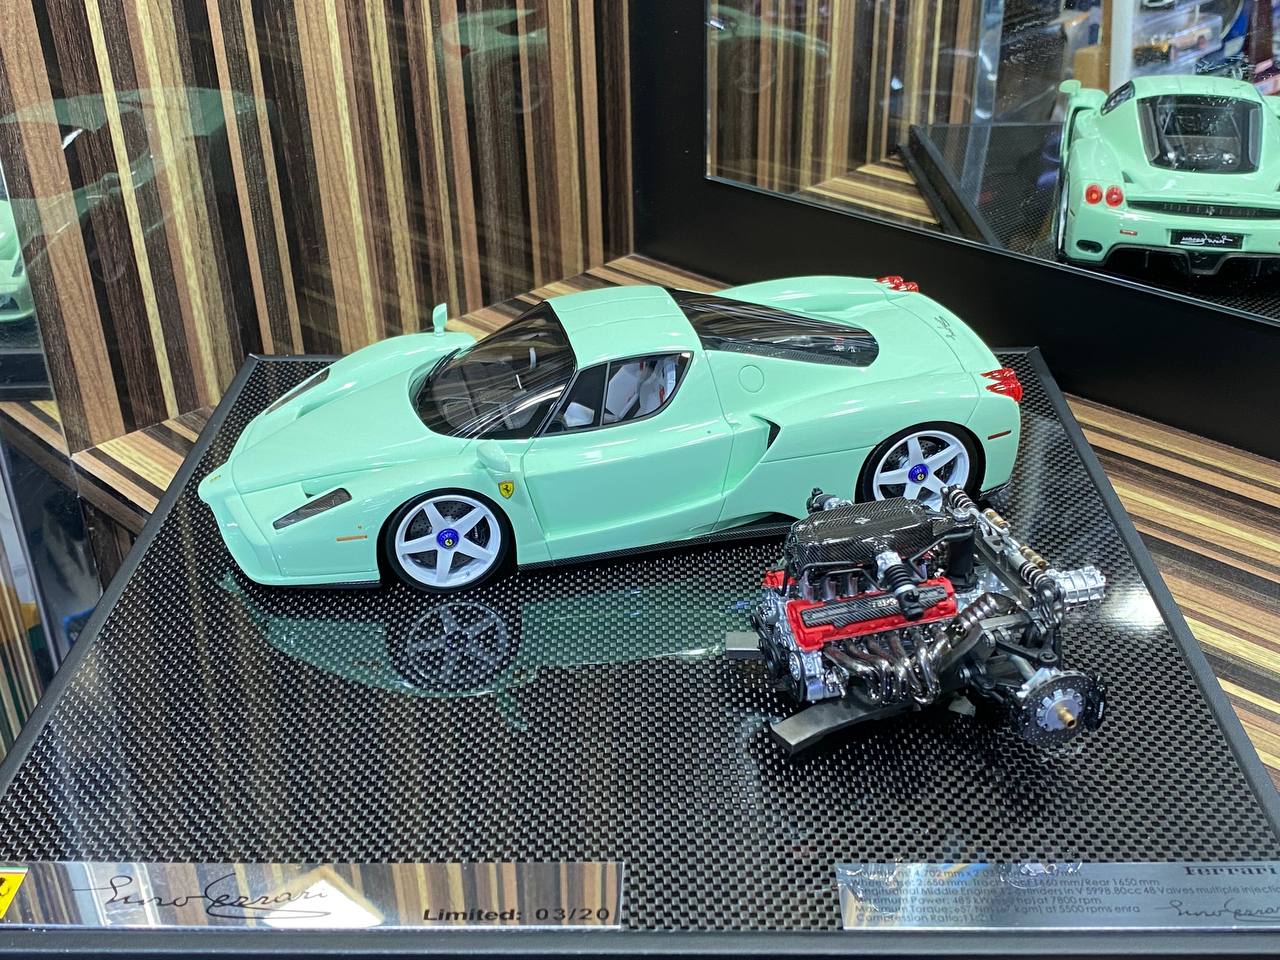 1/18 General Models Resin Model - Ferrari Enzo With Engine in Stunning Green|Sold in Dturman.com Dubai UAE.